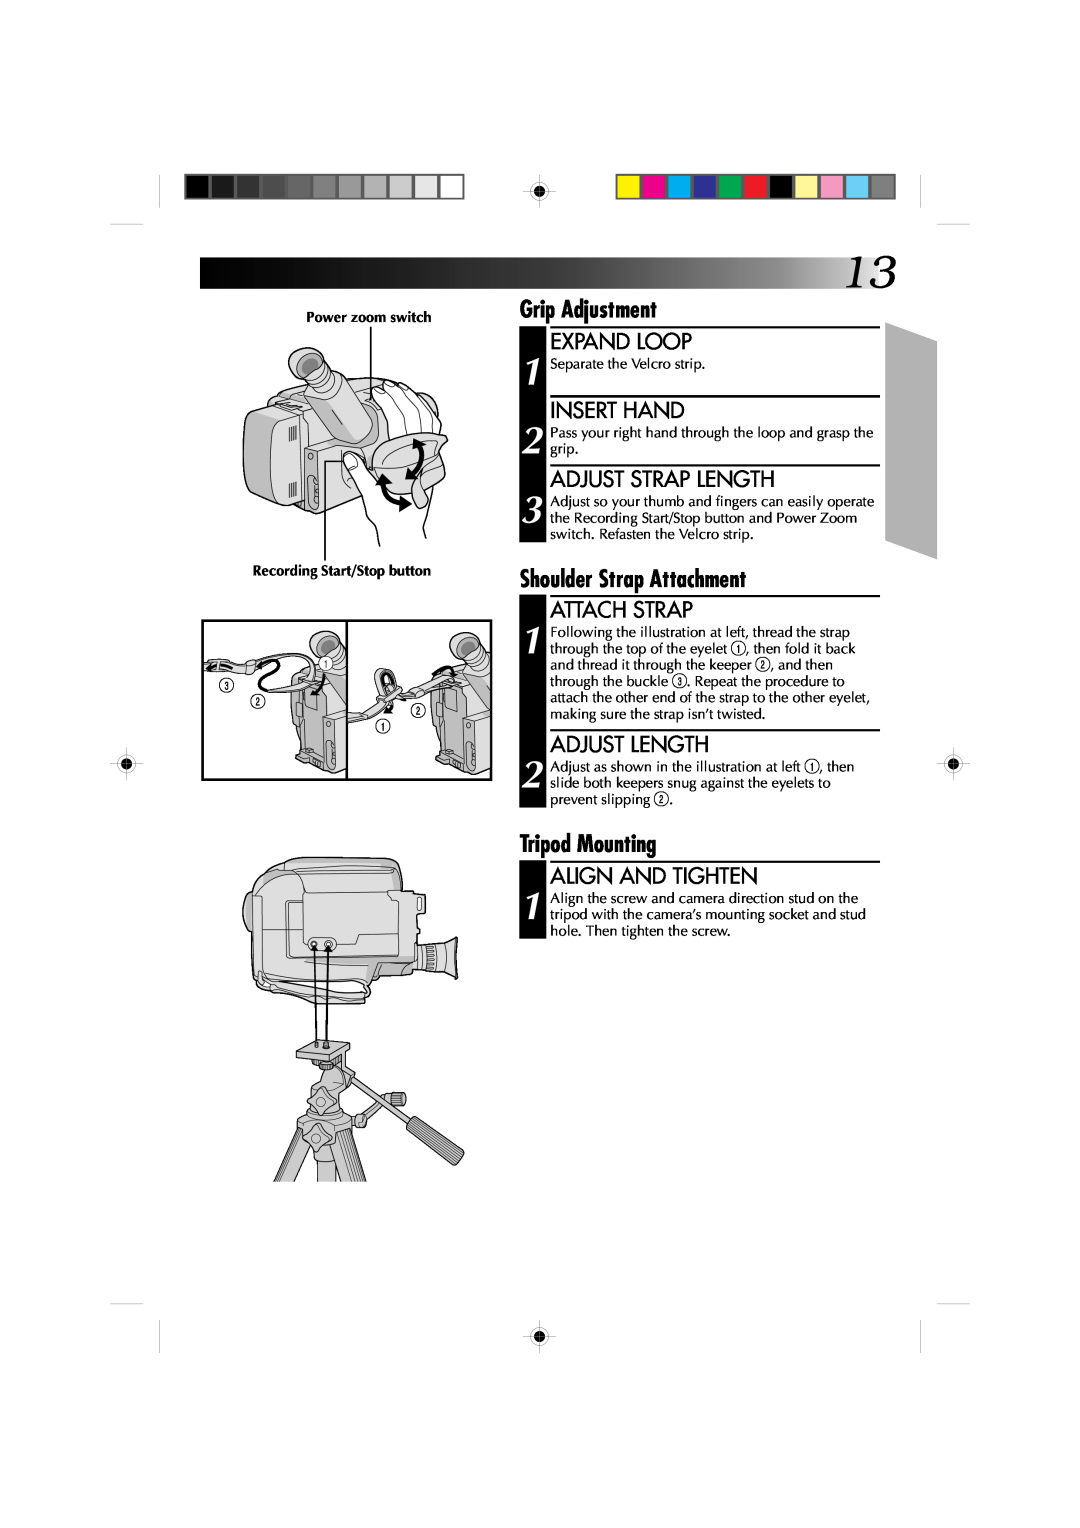 JVC GR-AXM1U Grip Adjustment, Shoulder Strap Attachment, Tripod Mounting, Expand Loop, Insert Hand, Adjust Strap Length 